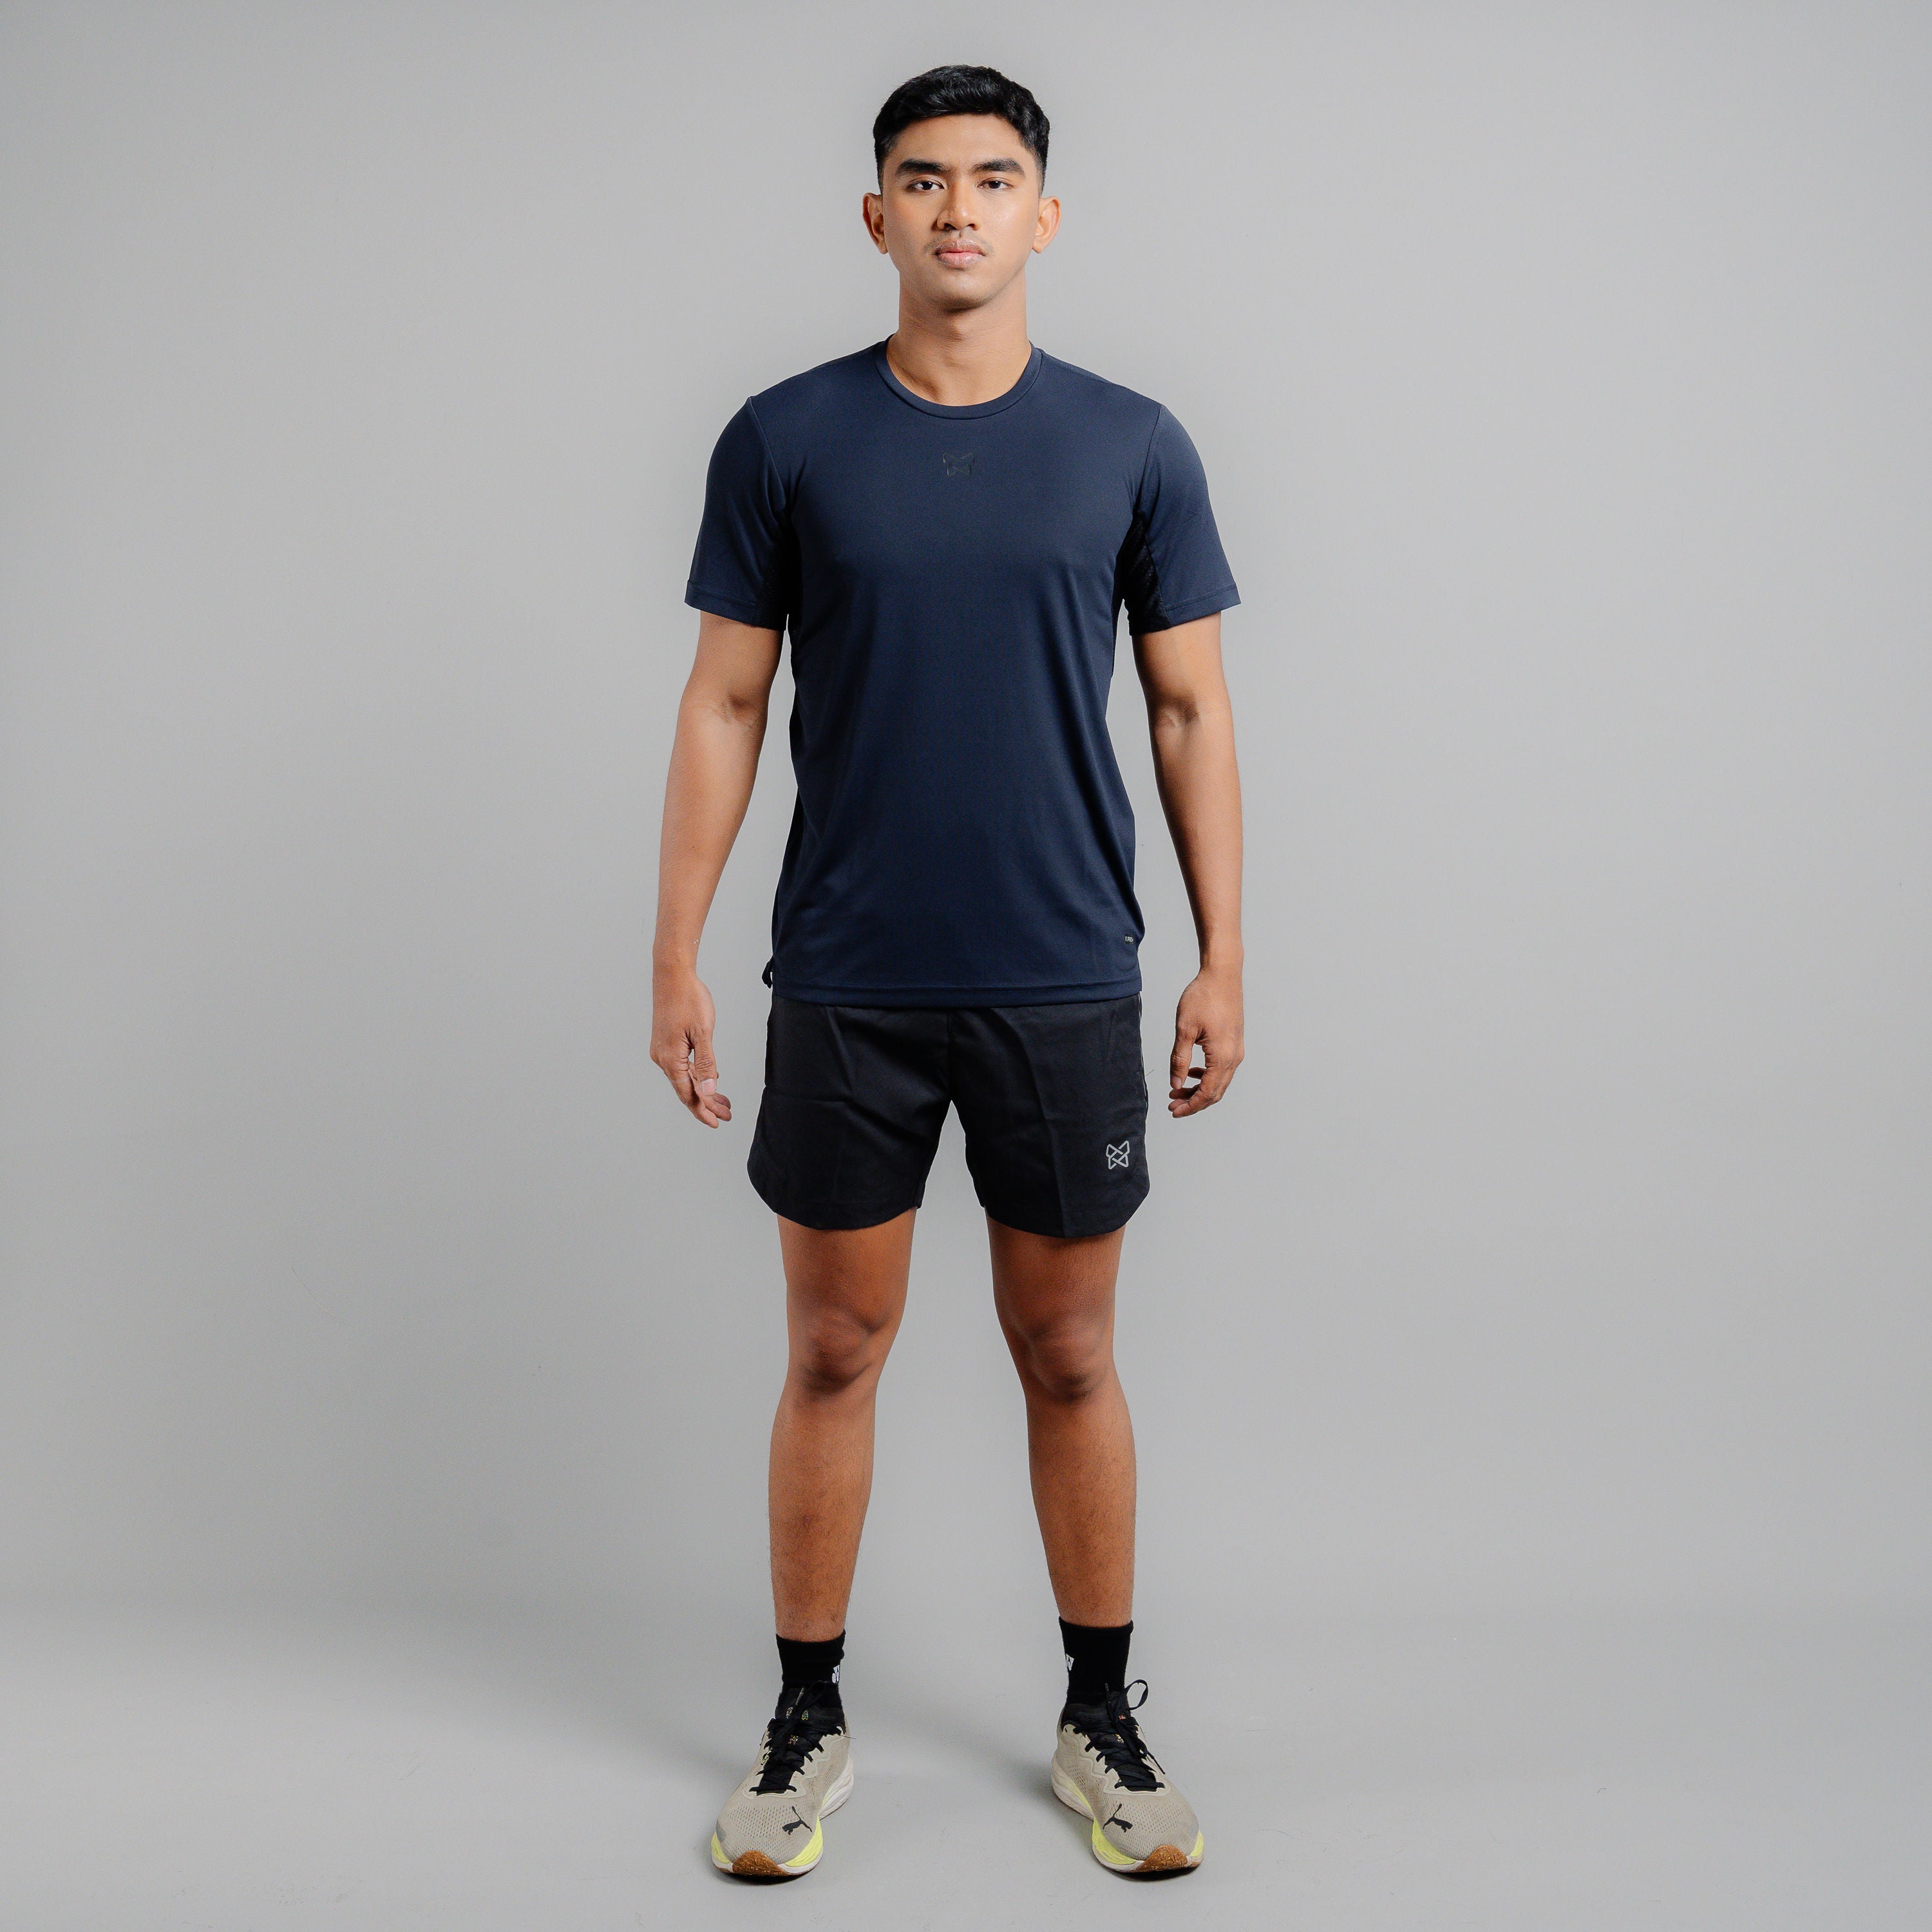 PACE Running T-Shirt - Kaos Lari Dry Fit